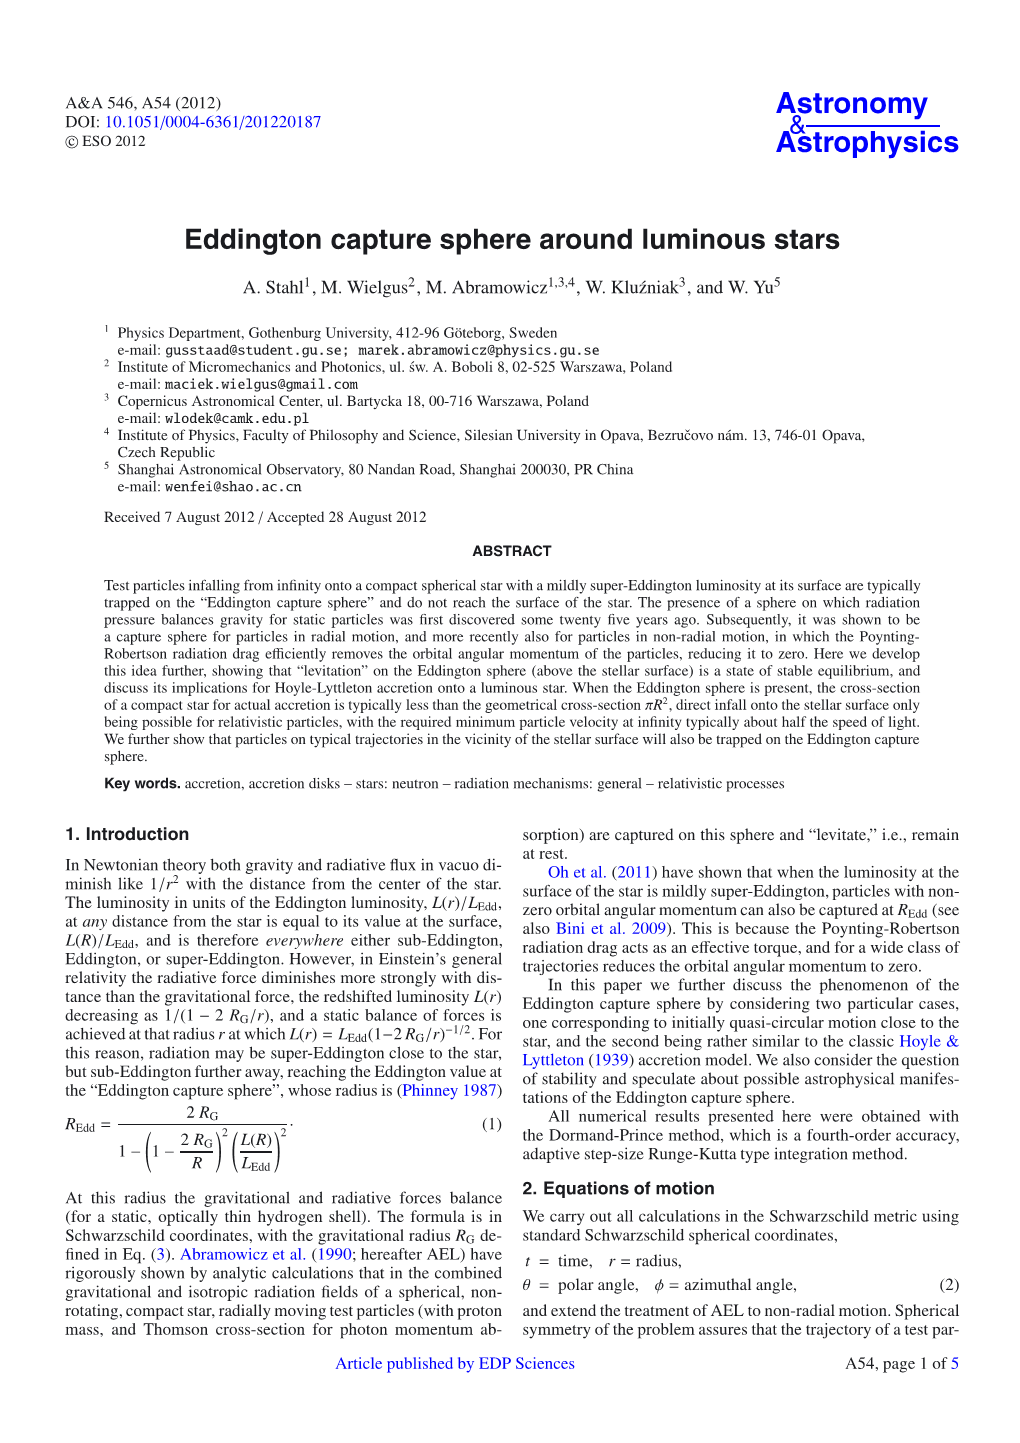 Eddington Capture Sphere Around Luminous Stars